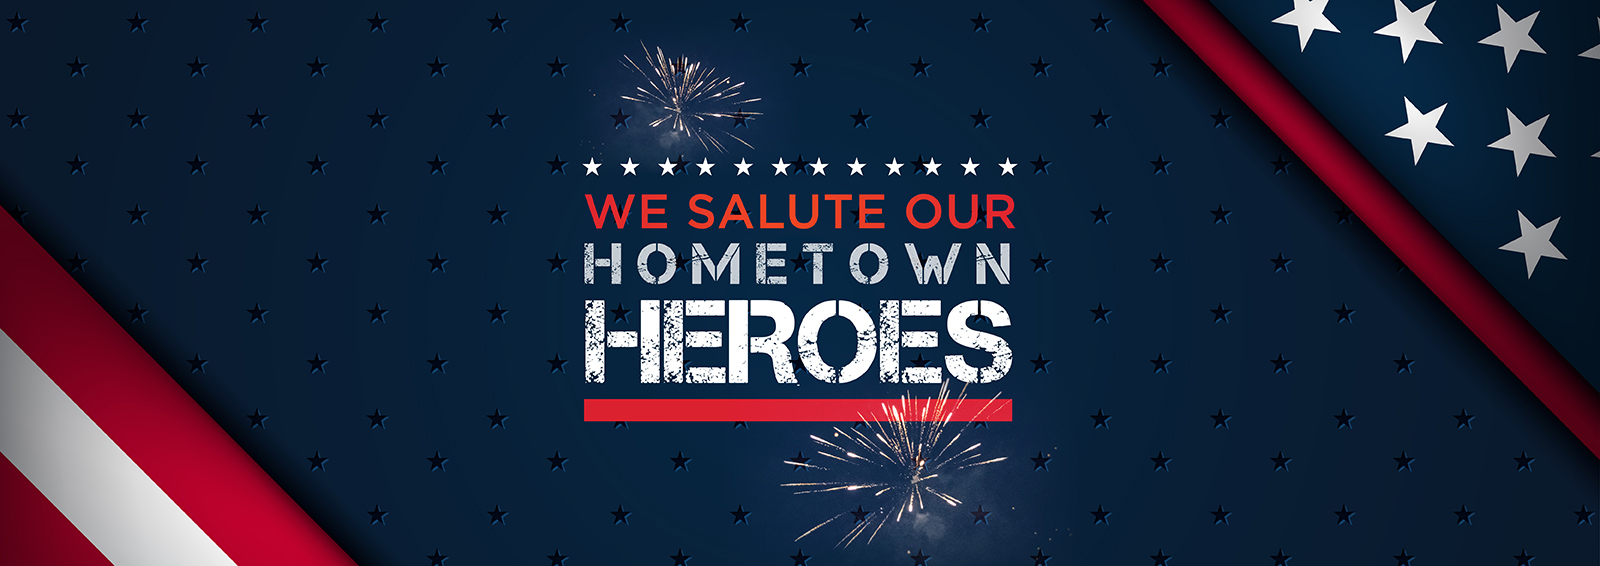 We salute our Hometown Heroes